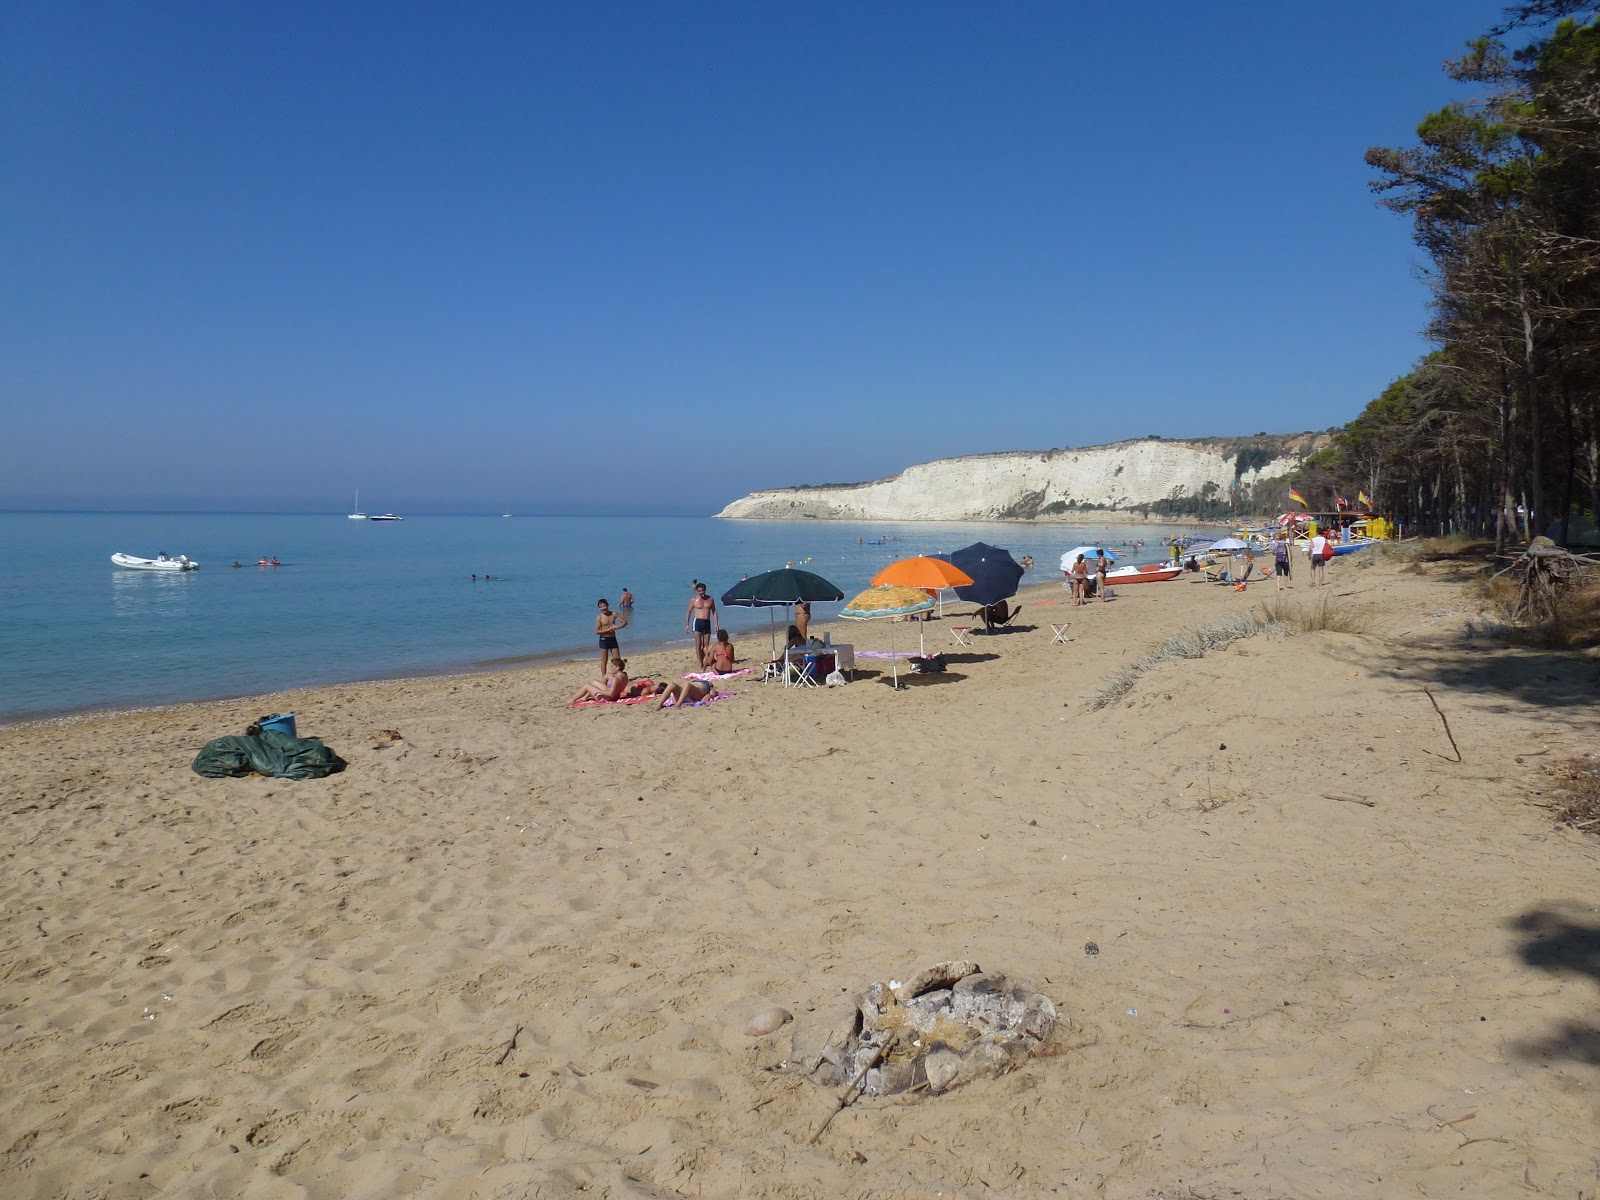 Photo of Spiaggia Di Eraclea Minoa and its beautiful scenery